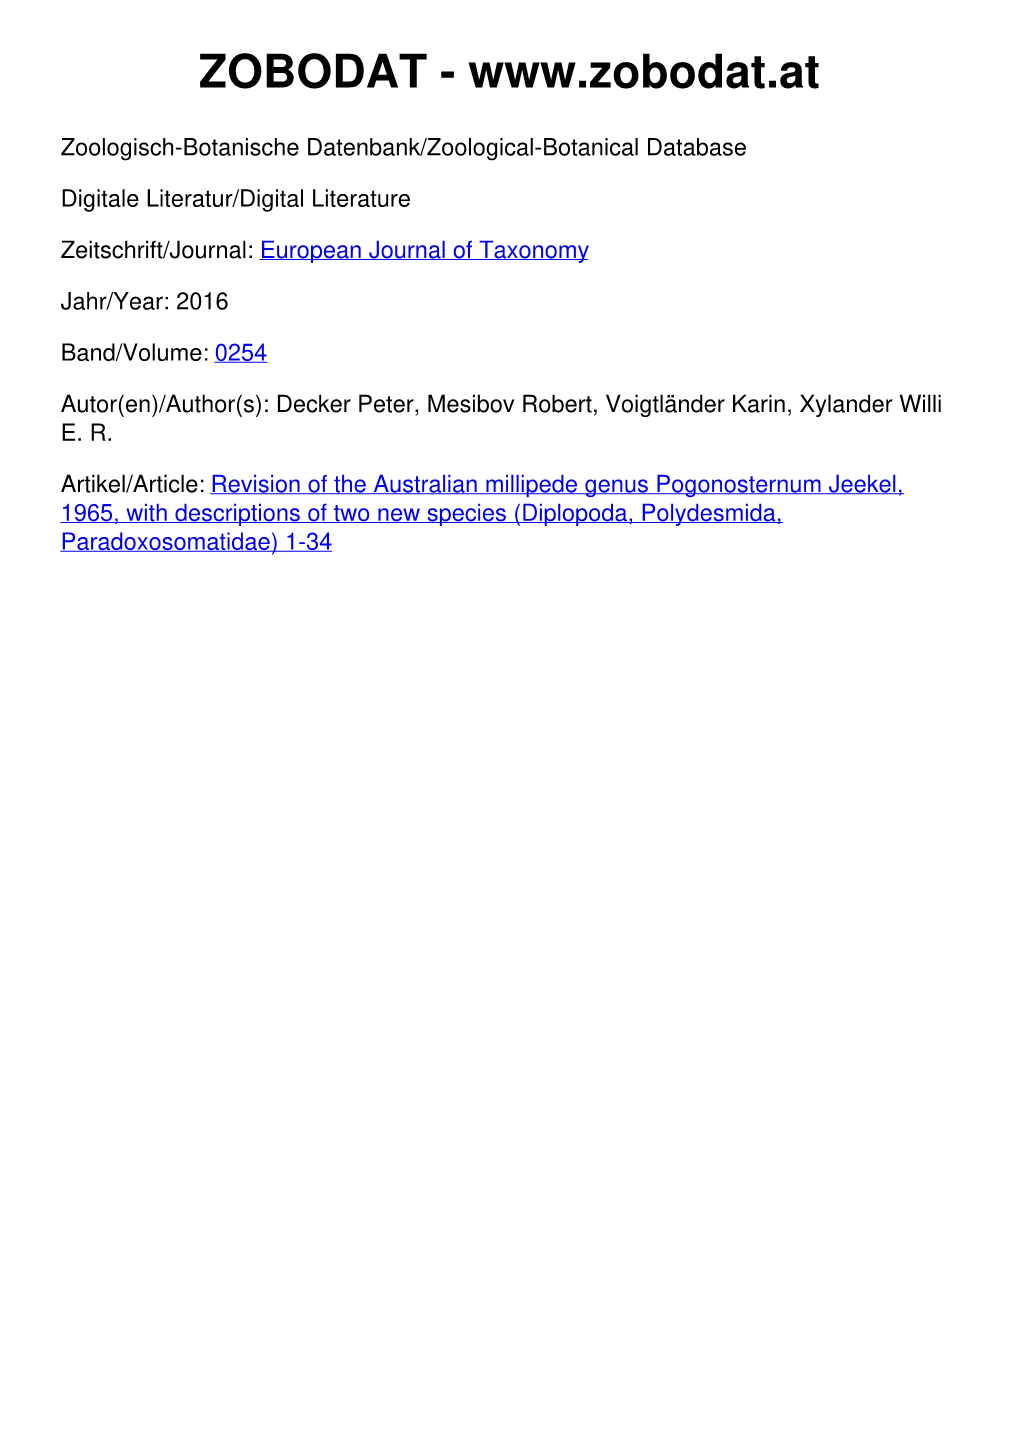 Revision of the Australian Millipede Genus Pogonosternum Jeekel